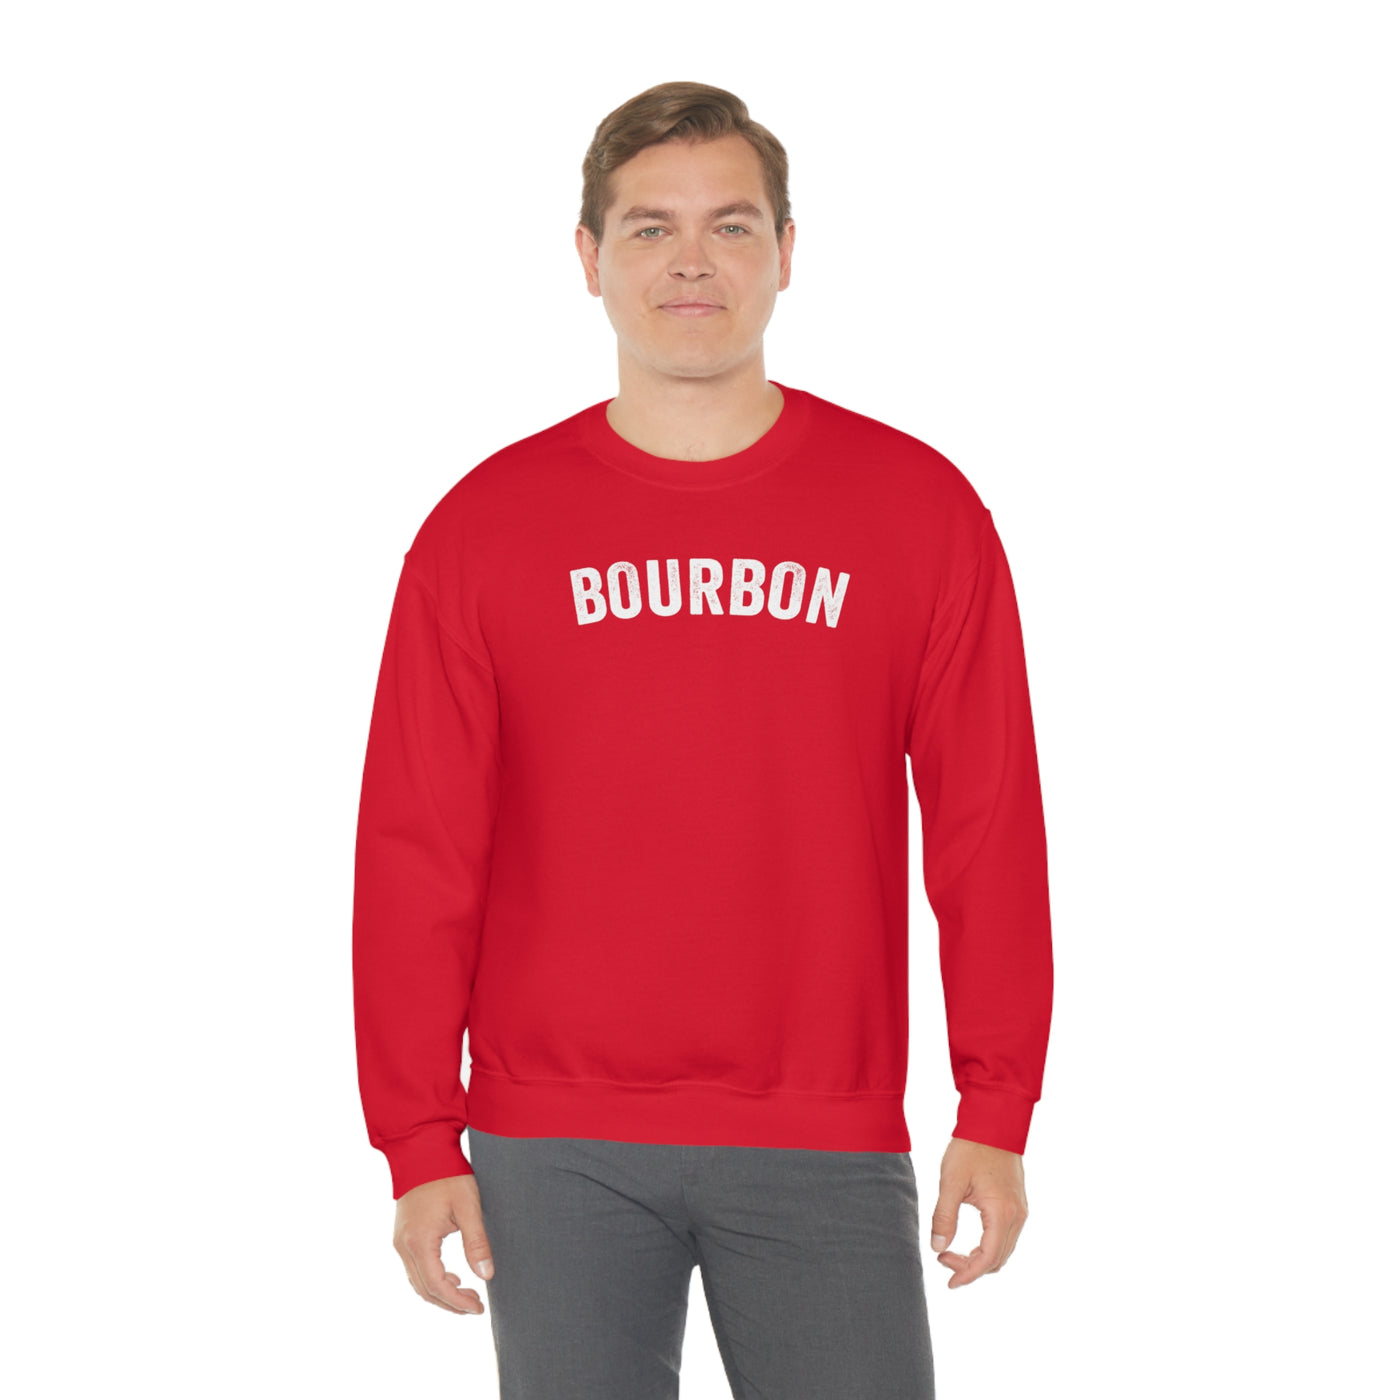 Bourbon Crewneck Sweatshirt